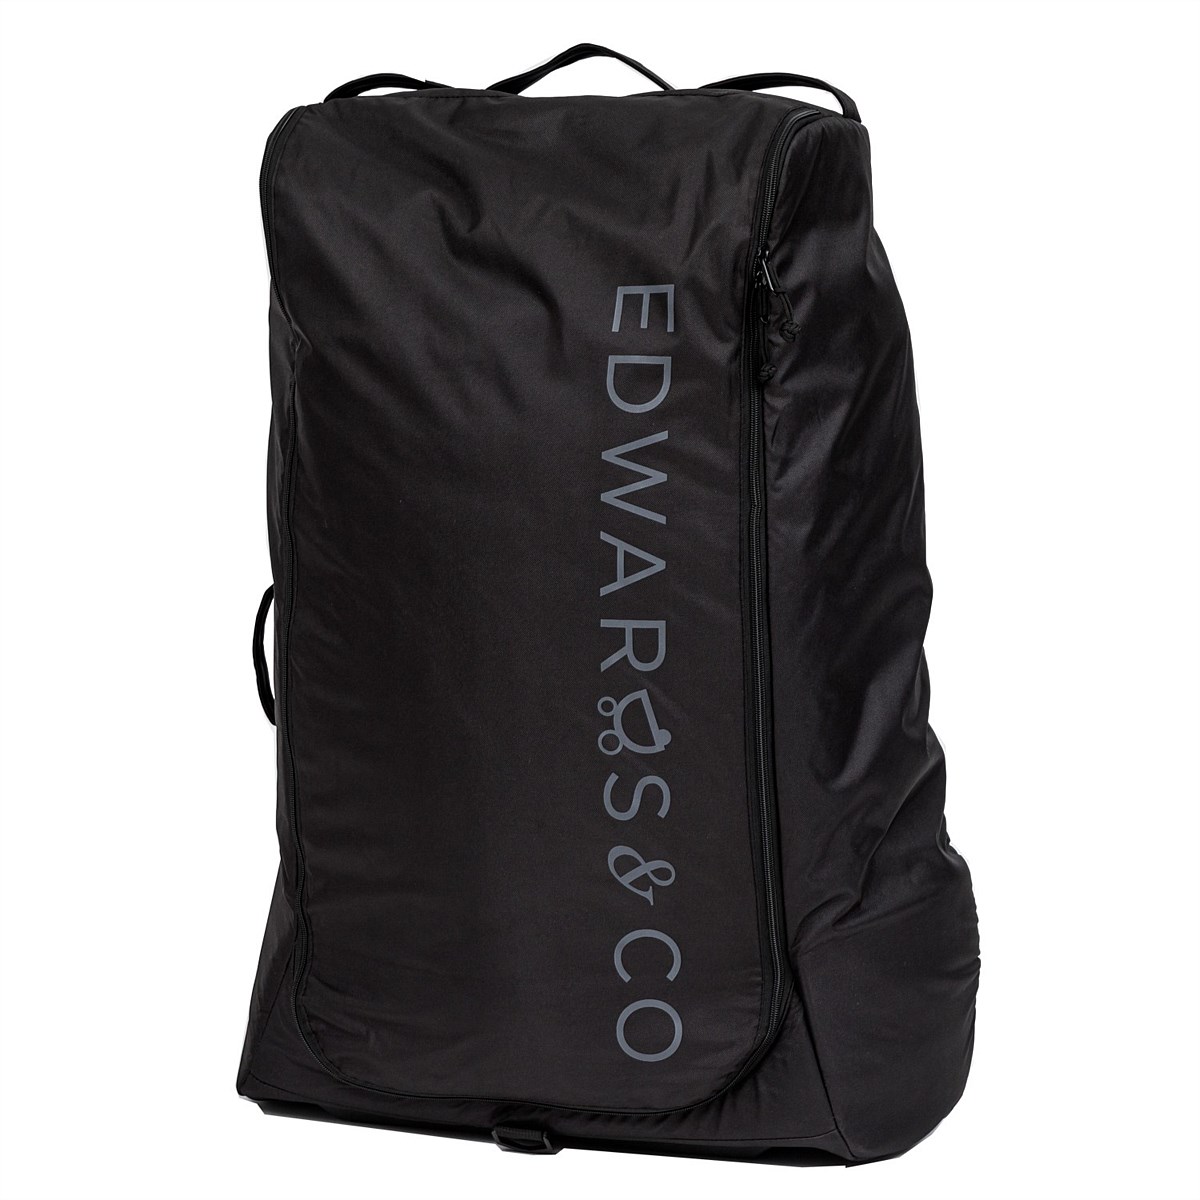 oscar mx travel bag